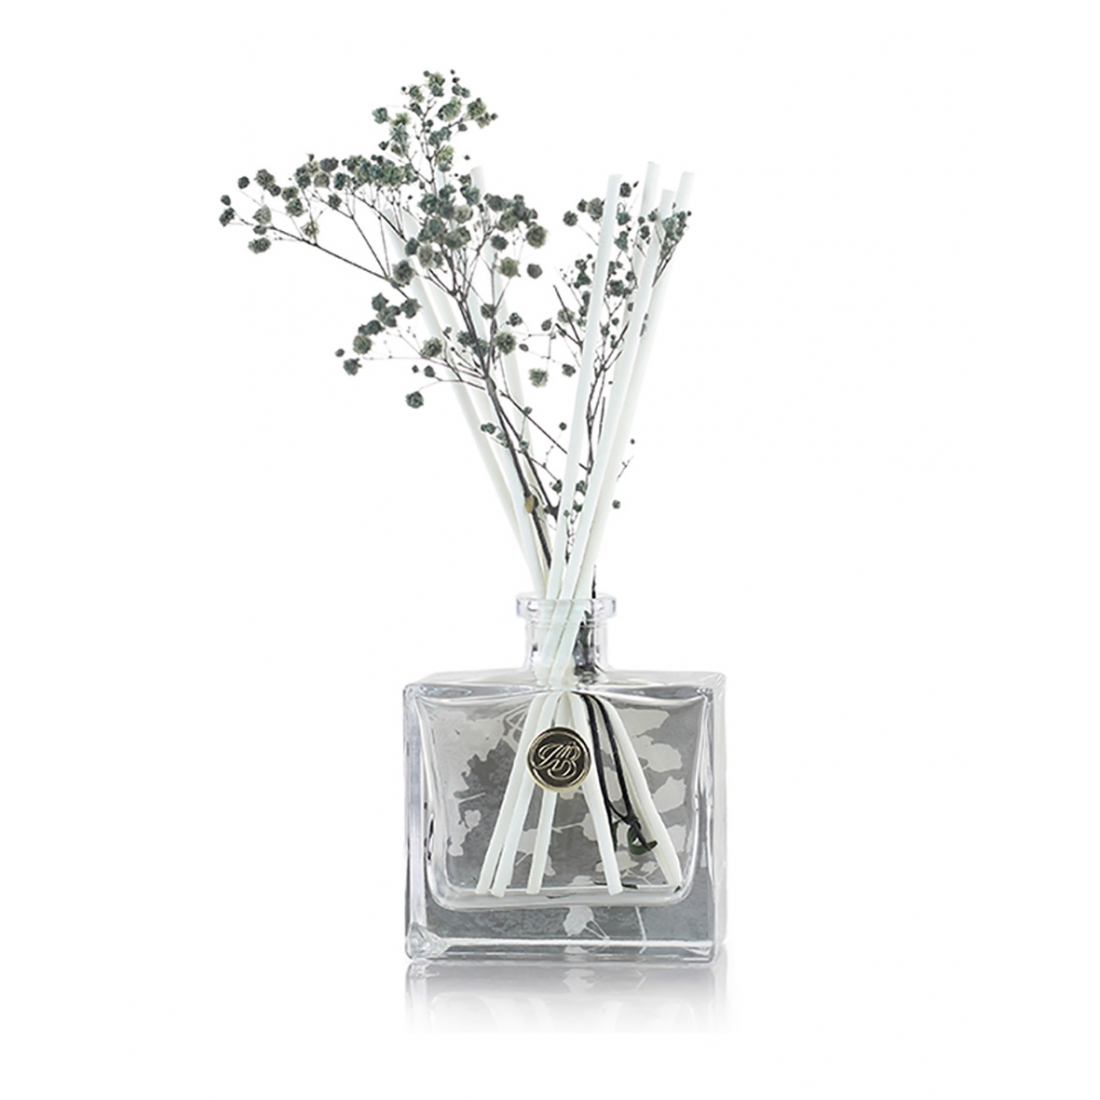 'Cotton Flower & Amber' Diffuser - 150 ml